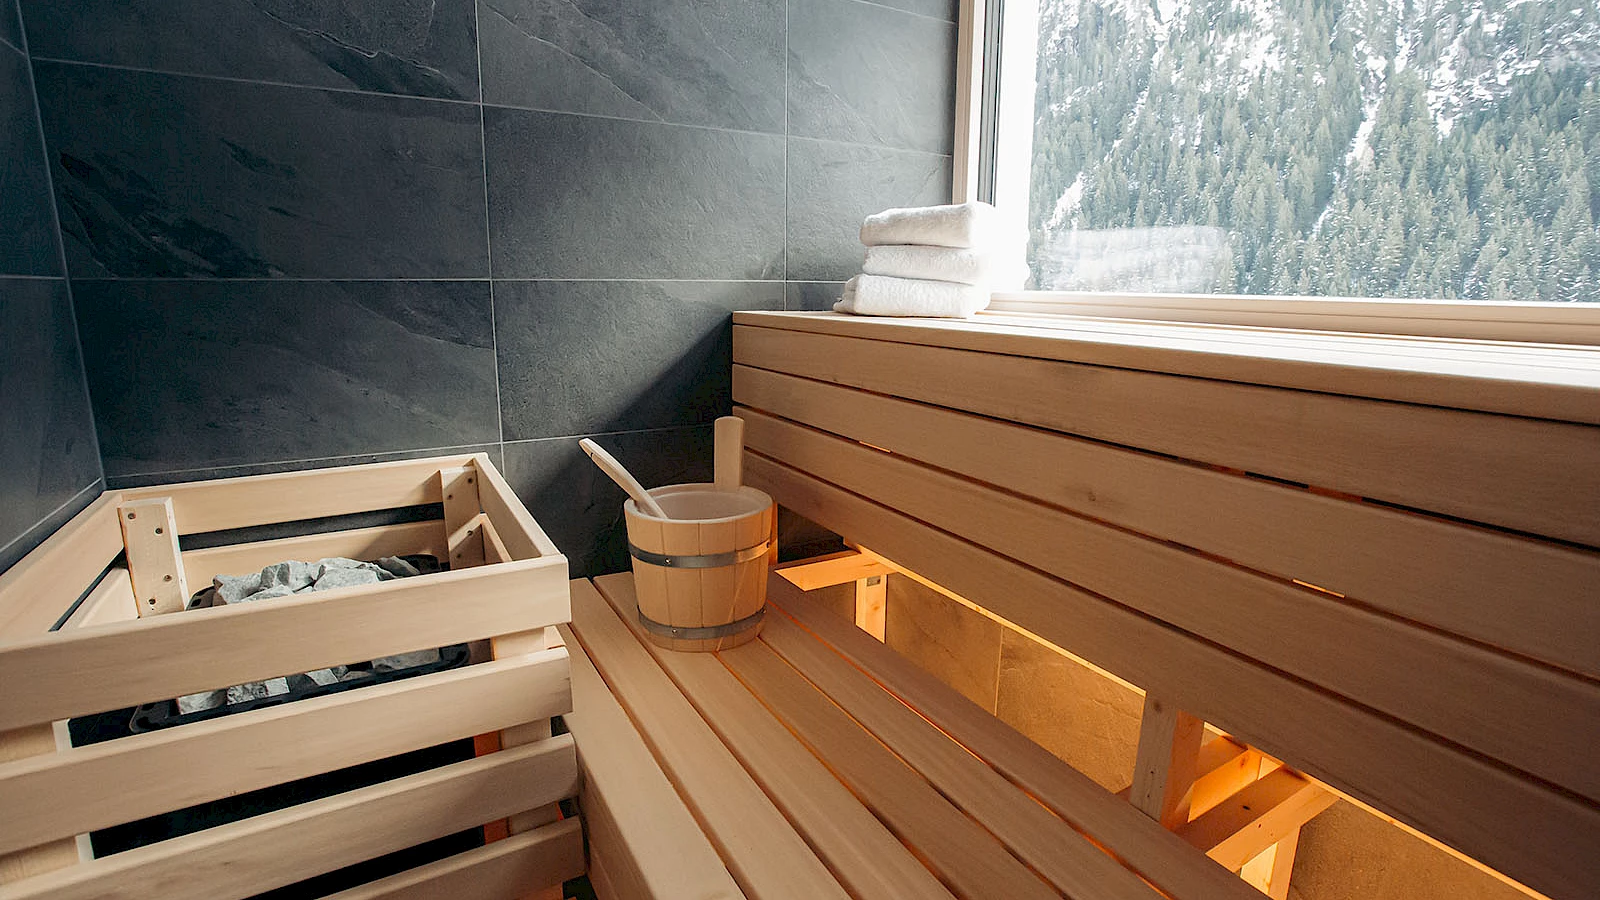 Private sauna in the vacation home Ischgl. Here you can sauna undisturbed.